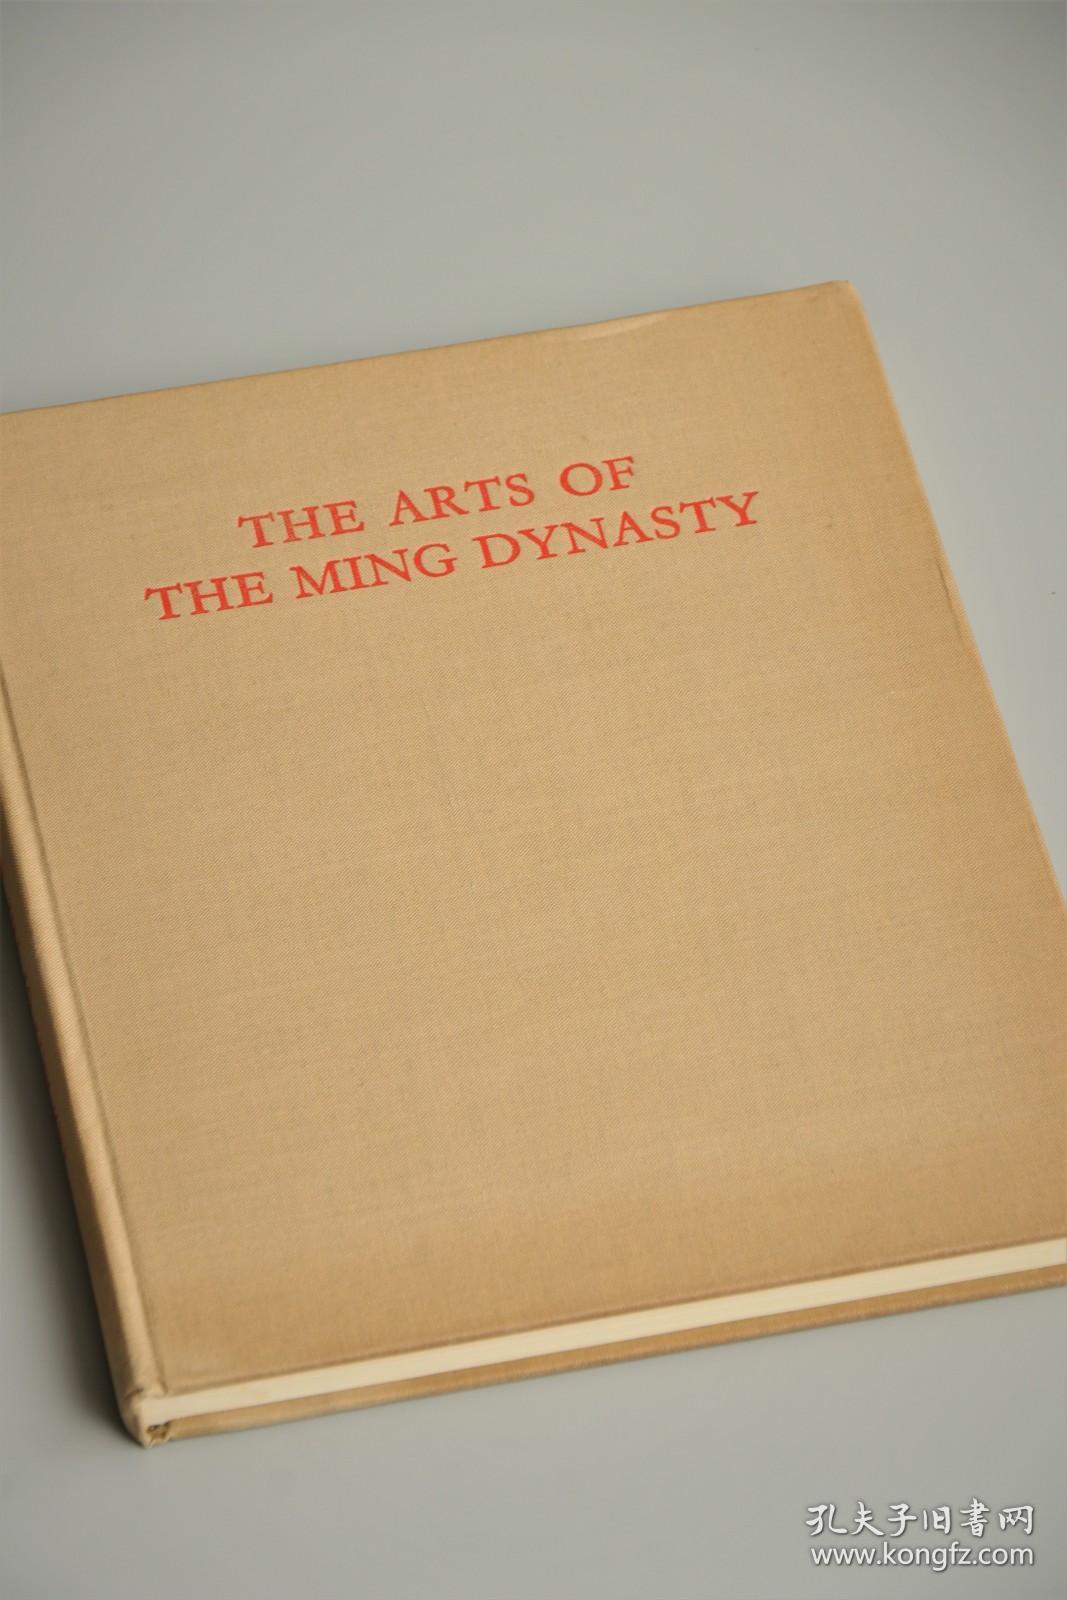 1958年 东方陶瓷学会 the arts of the ming dynasty（明代艺术）